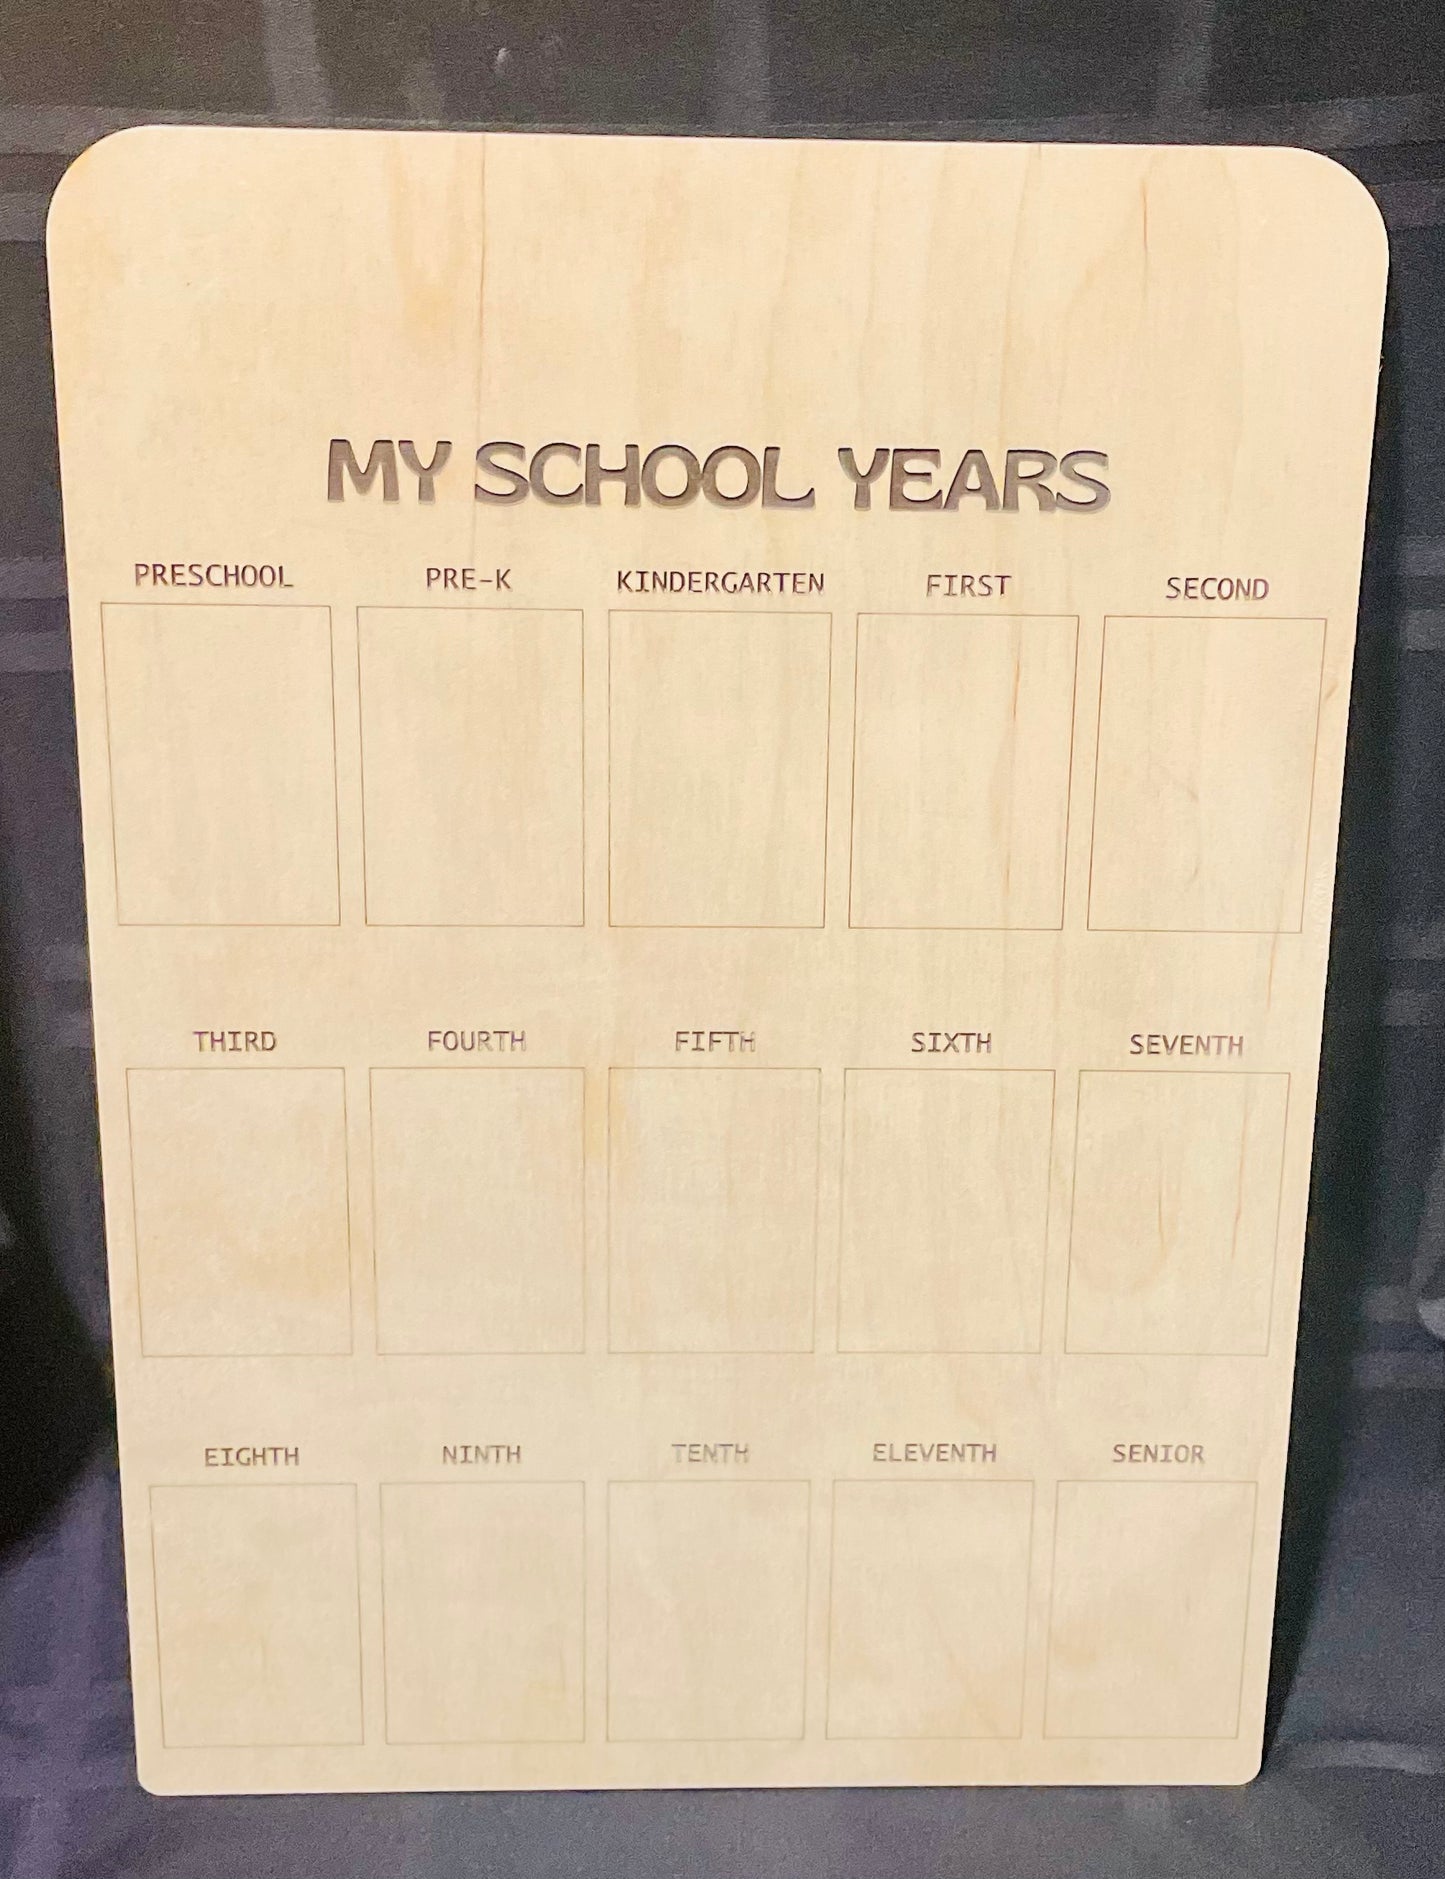 My School Years Photo Board